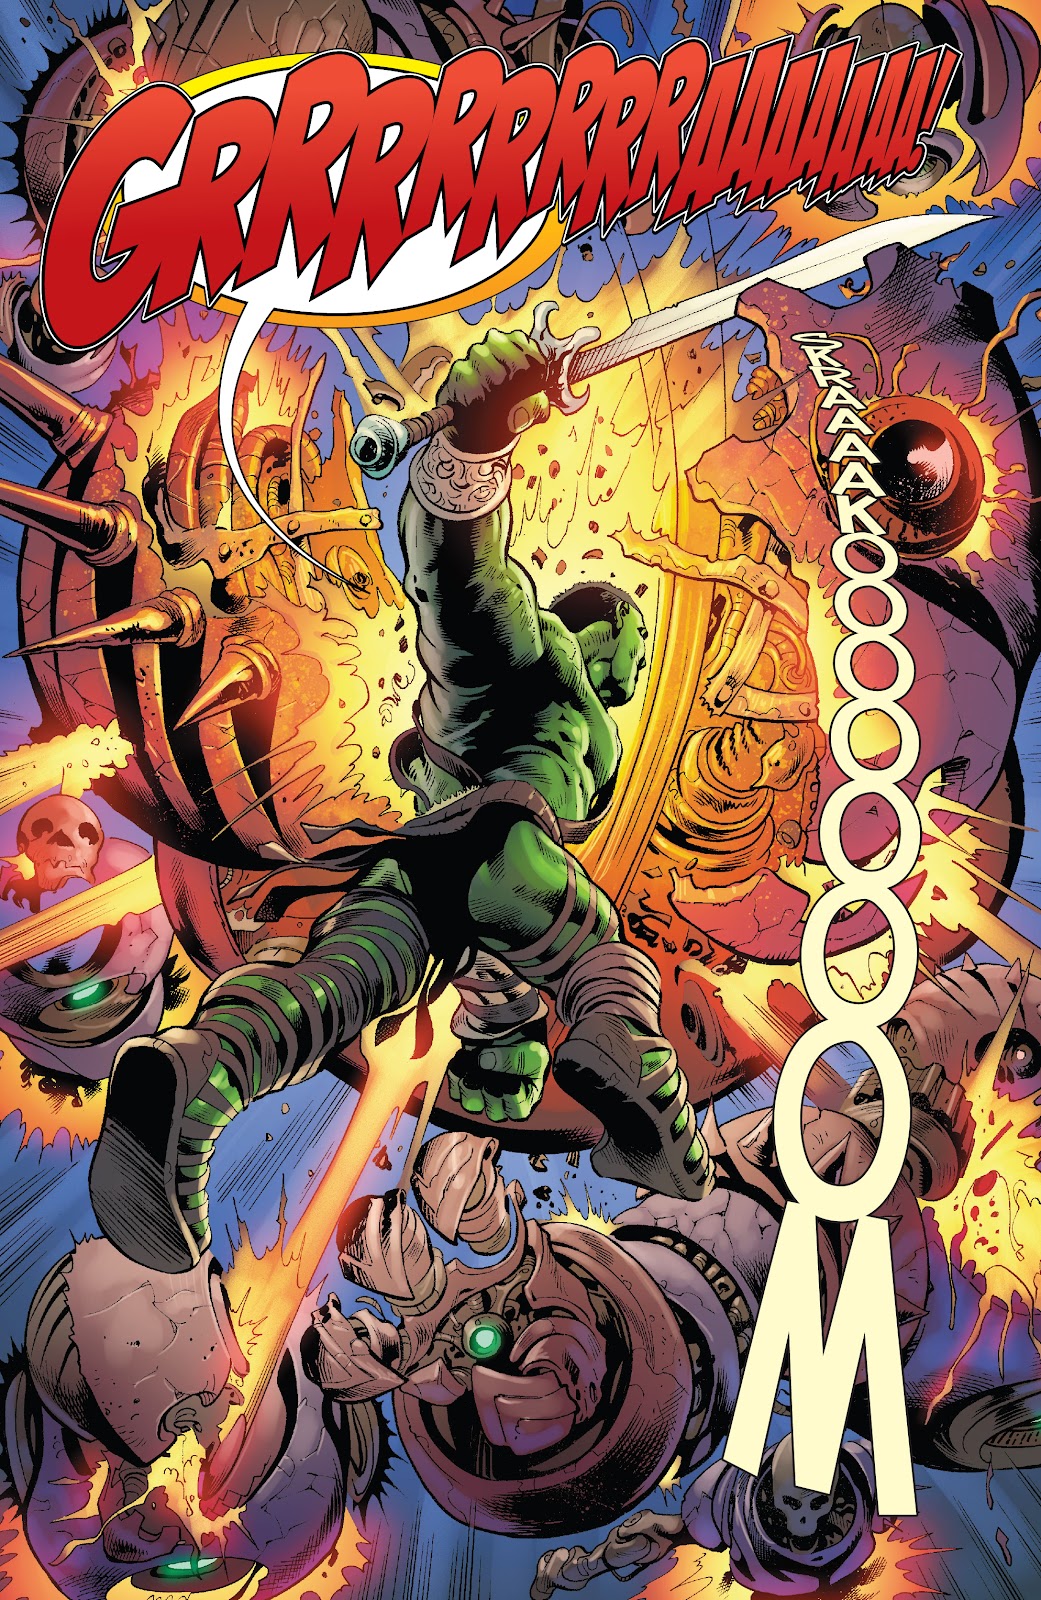 Planet Hulk Worldbreaker issue 5 - Page 6